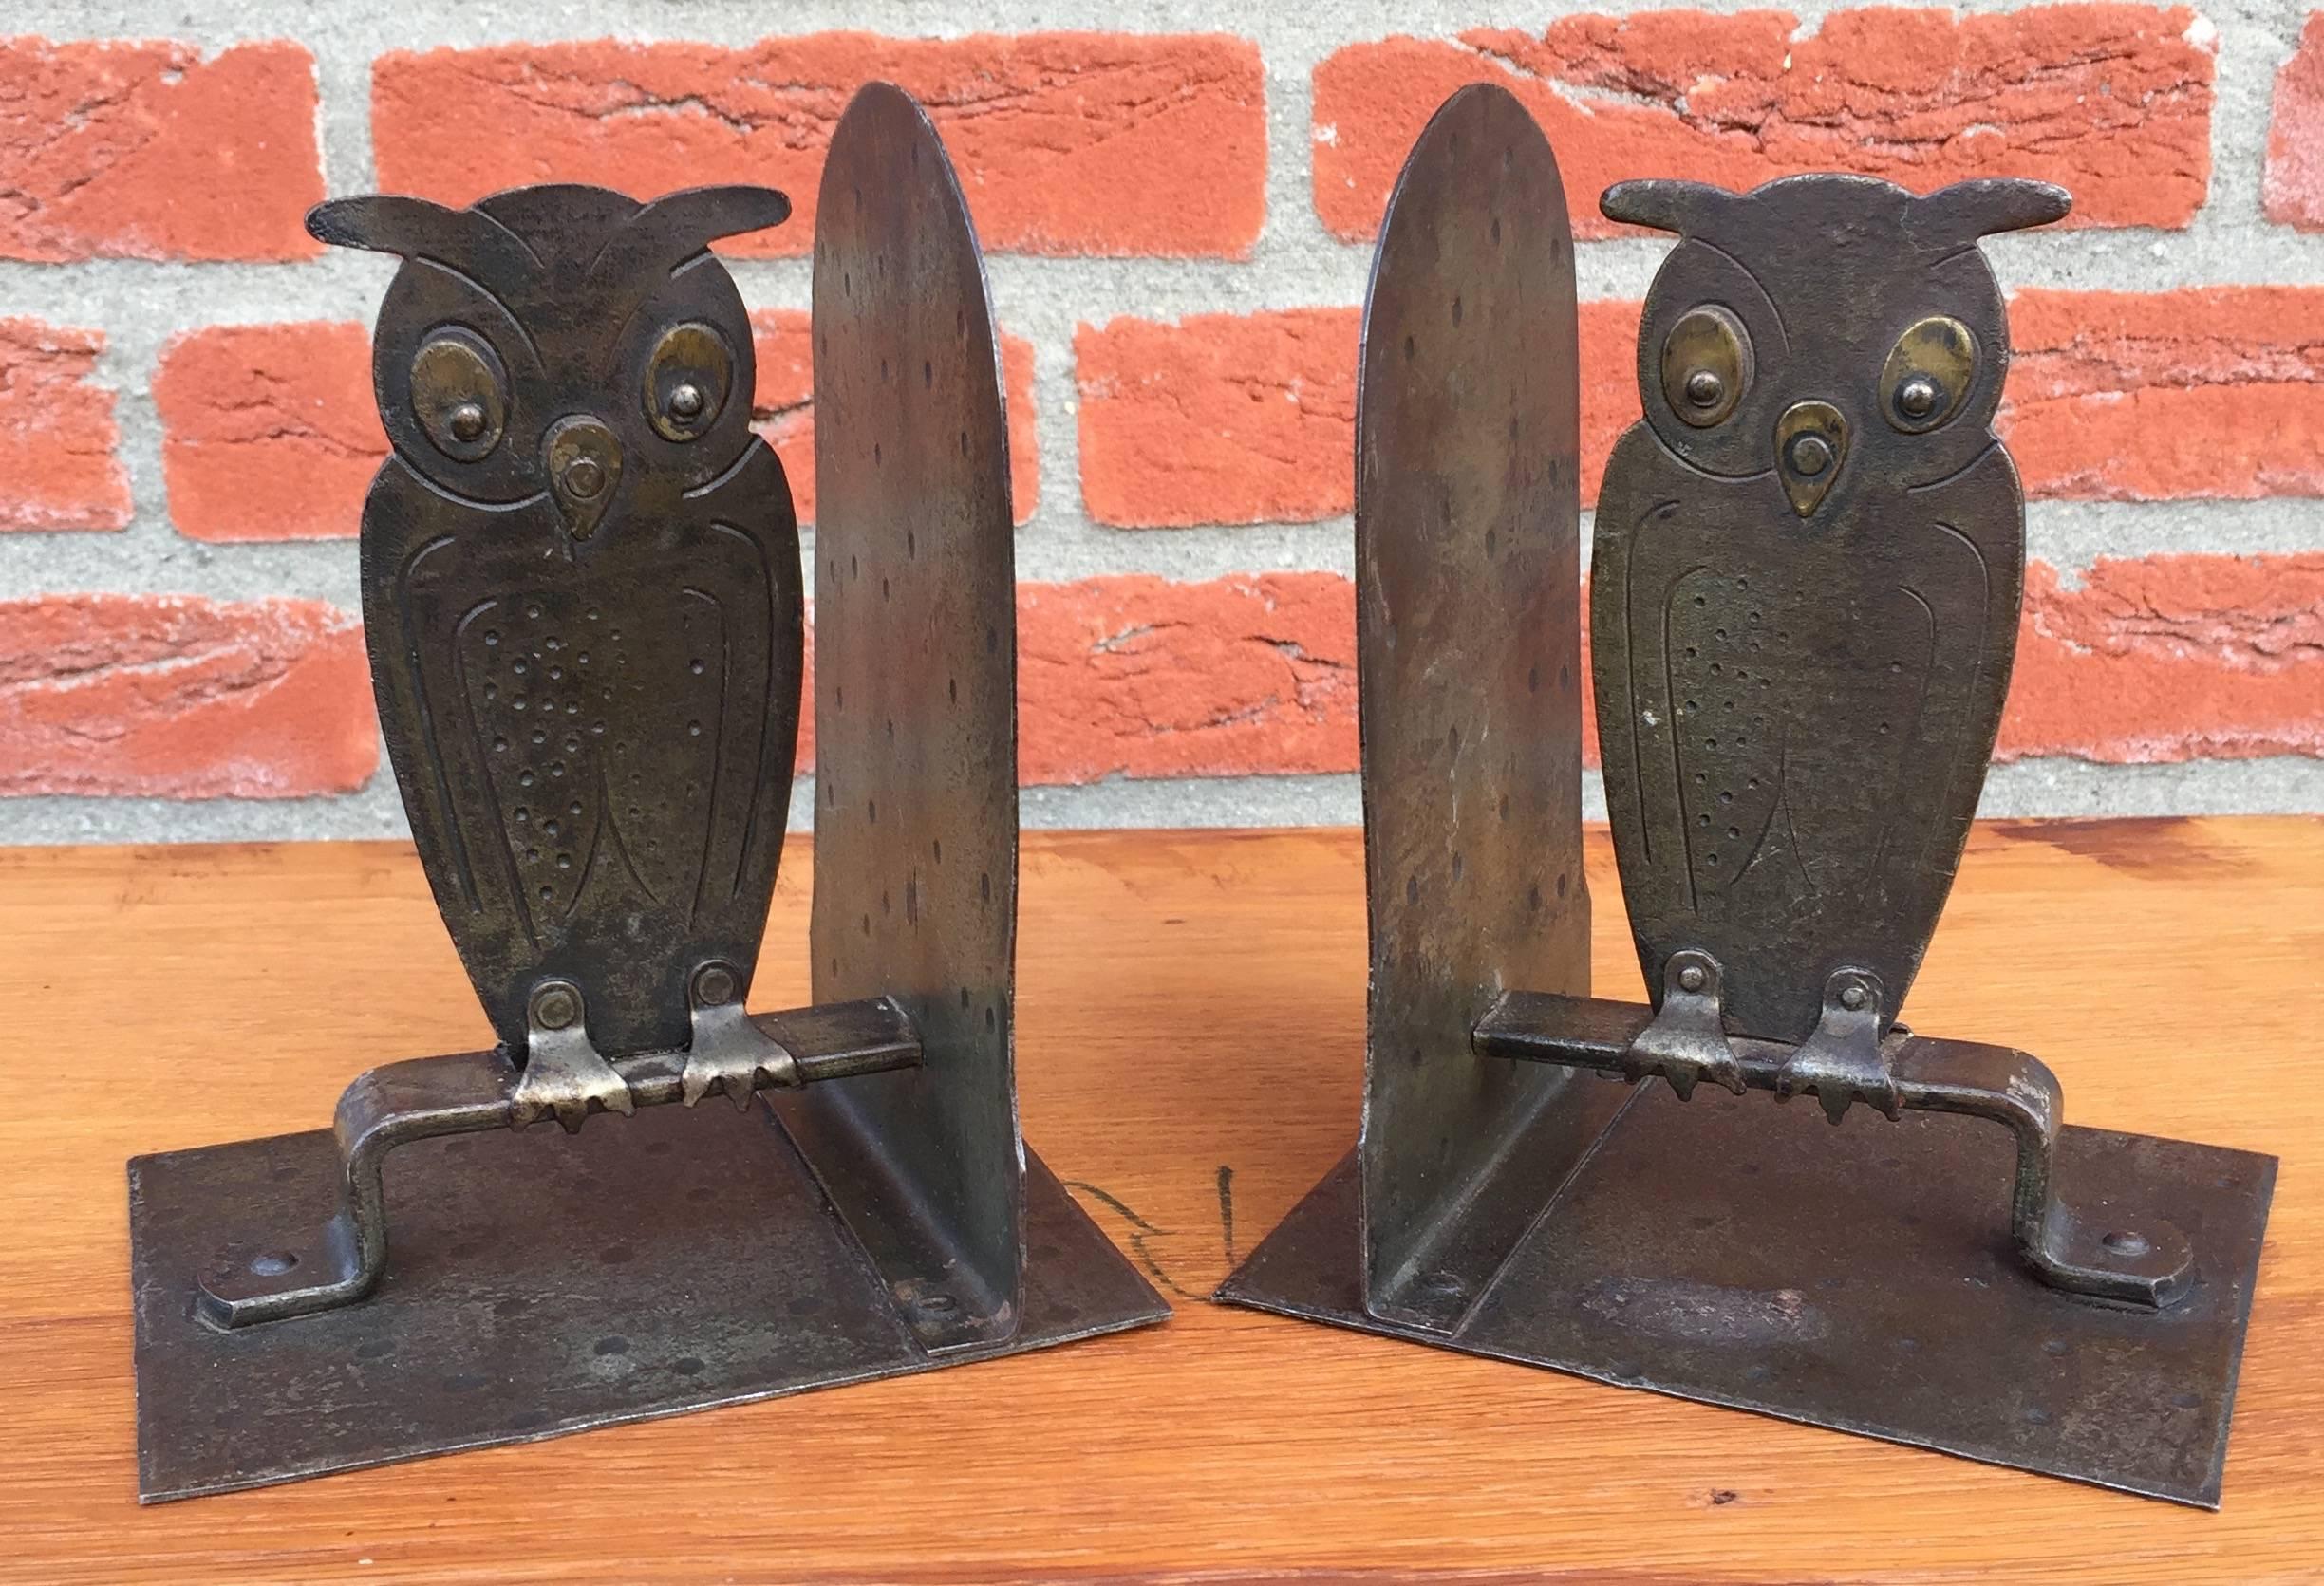 Vintage Pair of Hammered Metal Owl Bookends by Goberg, Hugo Berger, Germany 1